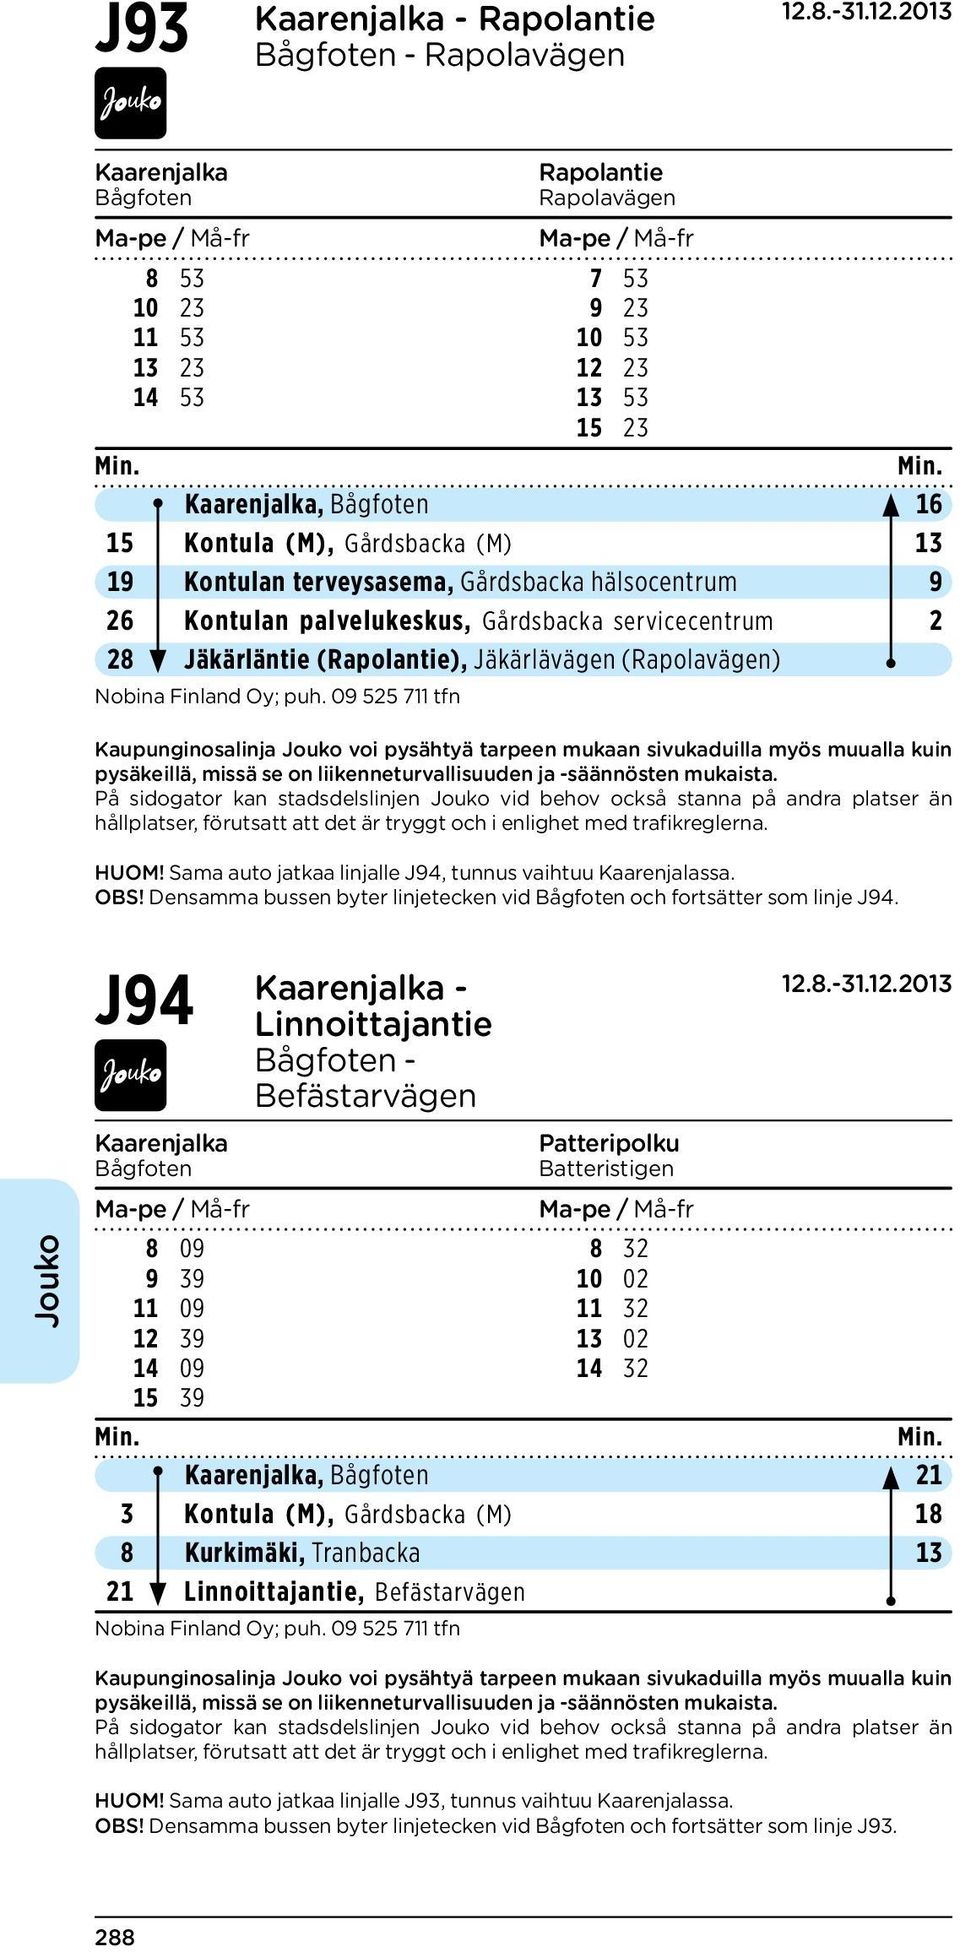 Sama auto jatkaa linjalle J94, tunnus vaihtuu Kaarenjalassa. OBS! Densamma bussen byter linjetecken vid Bågfoten och fortsätter som linje J94.